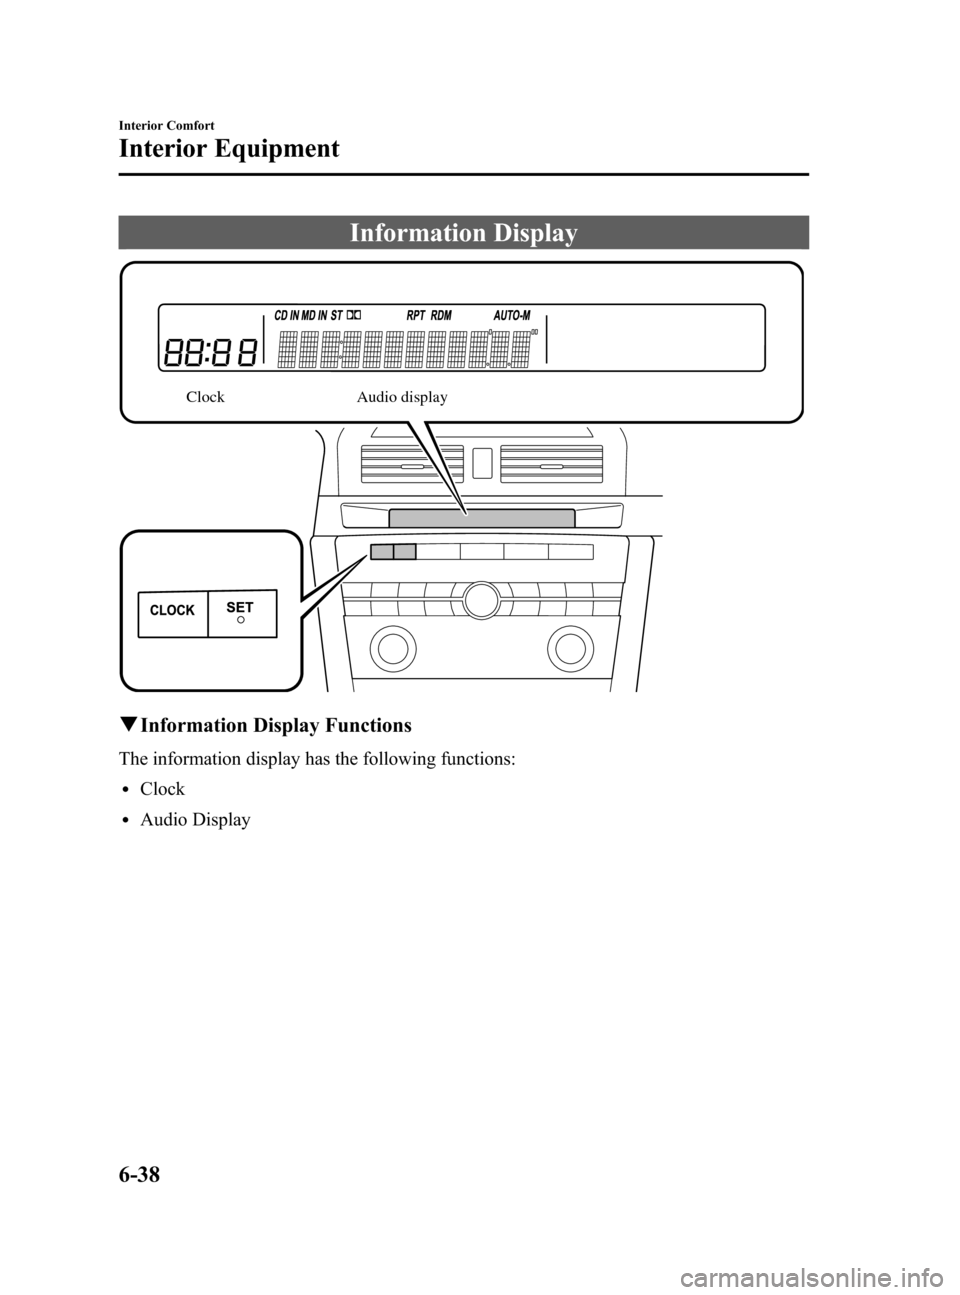 MAZDA MODEL 3 HATCHBACK 2005  Owners Manual (in English) Black plate (200,1)
Information Display
ClockAudio display
qInformation Display Functions
The information display has the following functions:
lClock
lAudio Display
6-38
Interior Comfort
Interior Equi